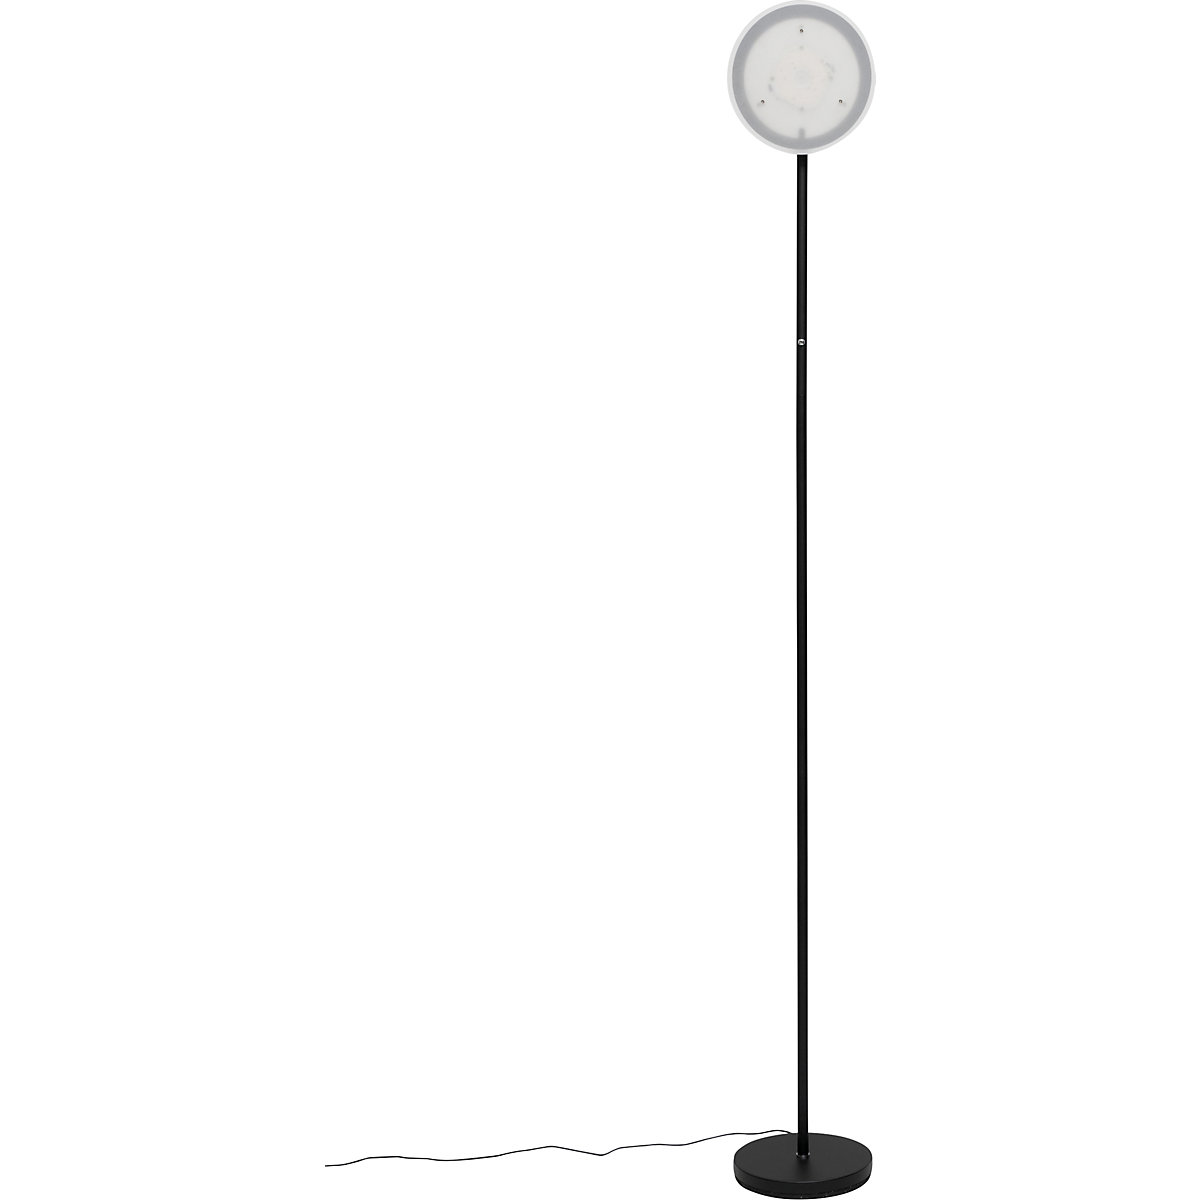 Stoječa LED-svetilka MAULsphere, obrnjena v strop – MAUL (Slika izdelka 8)-7